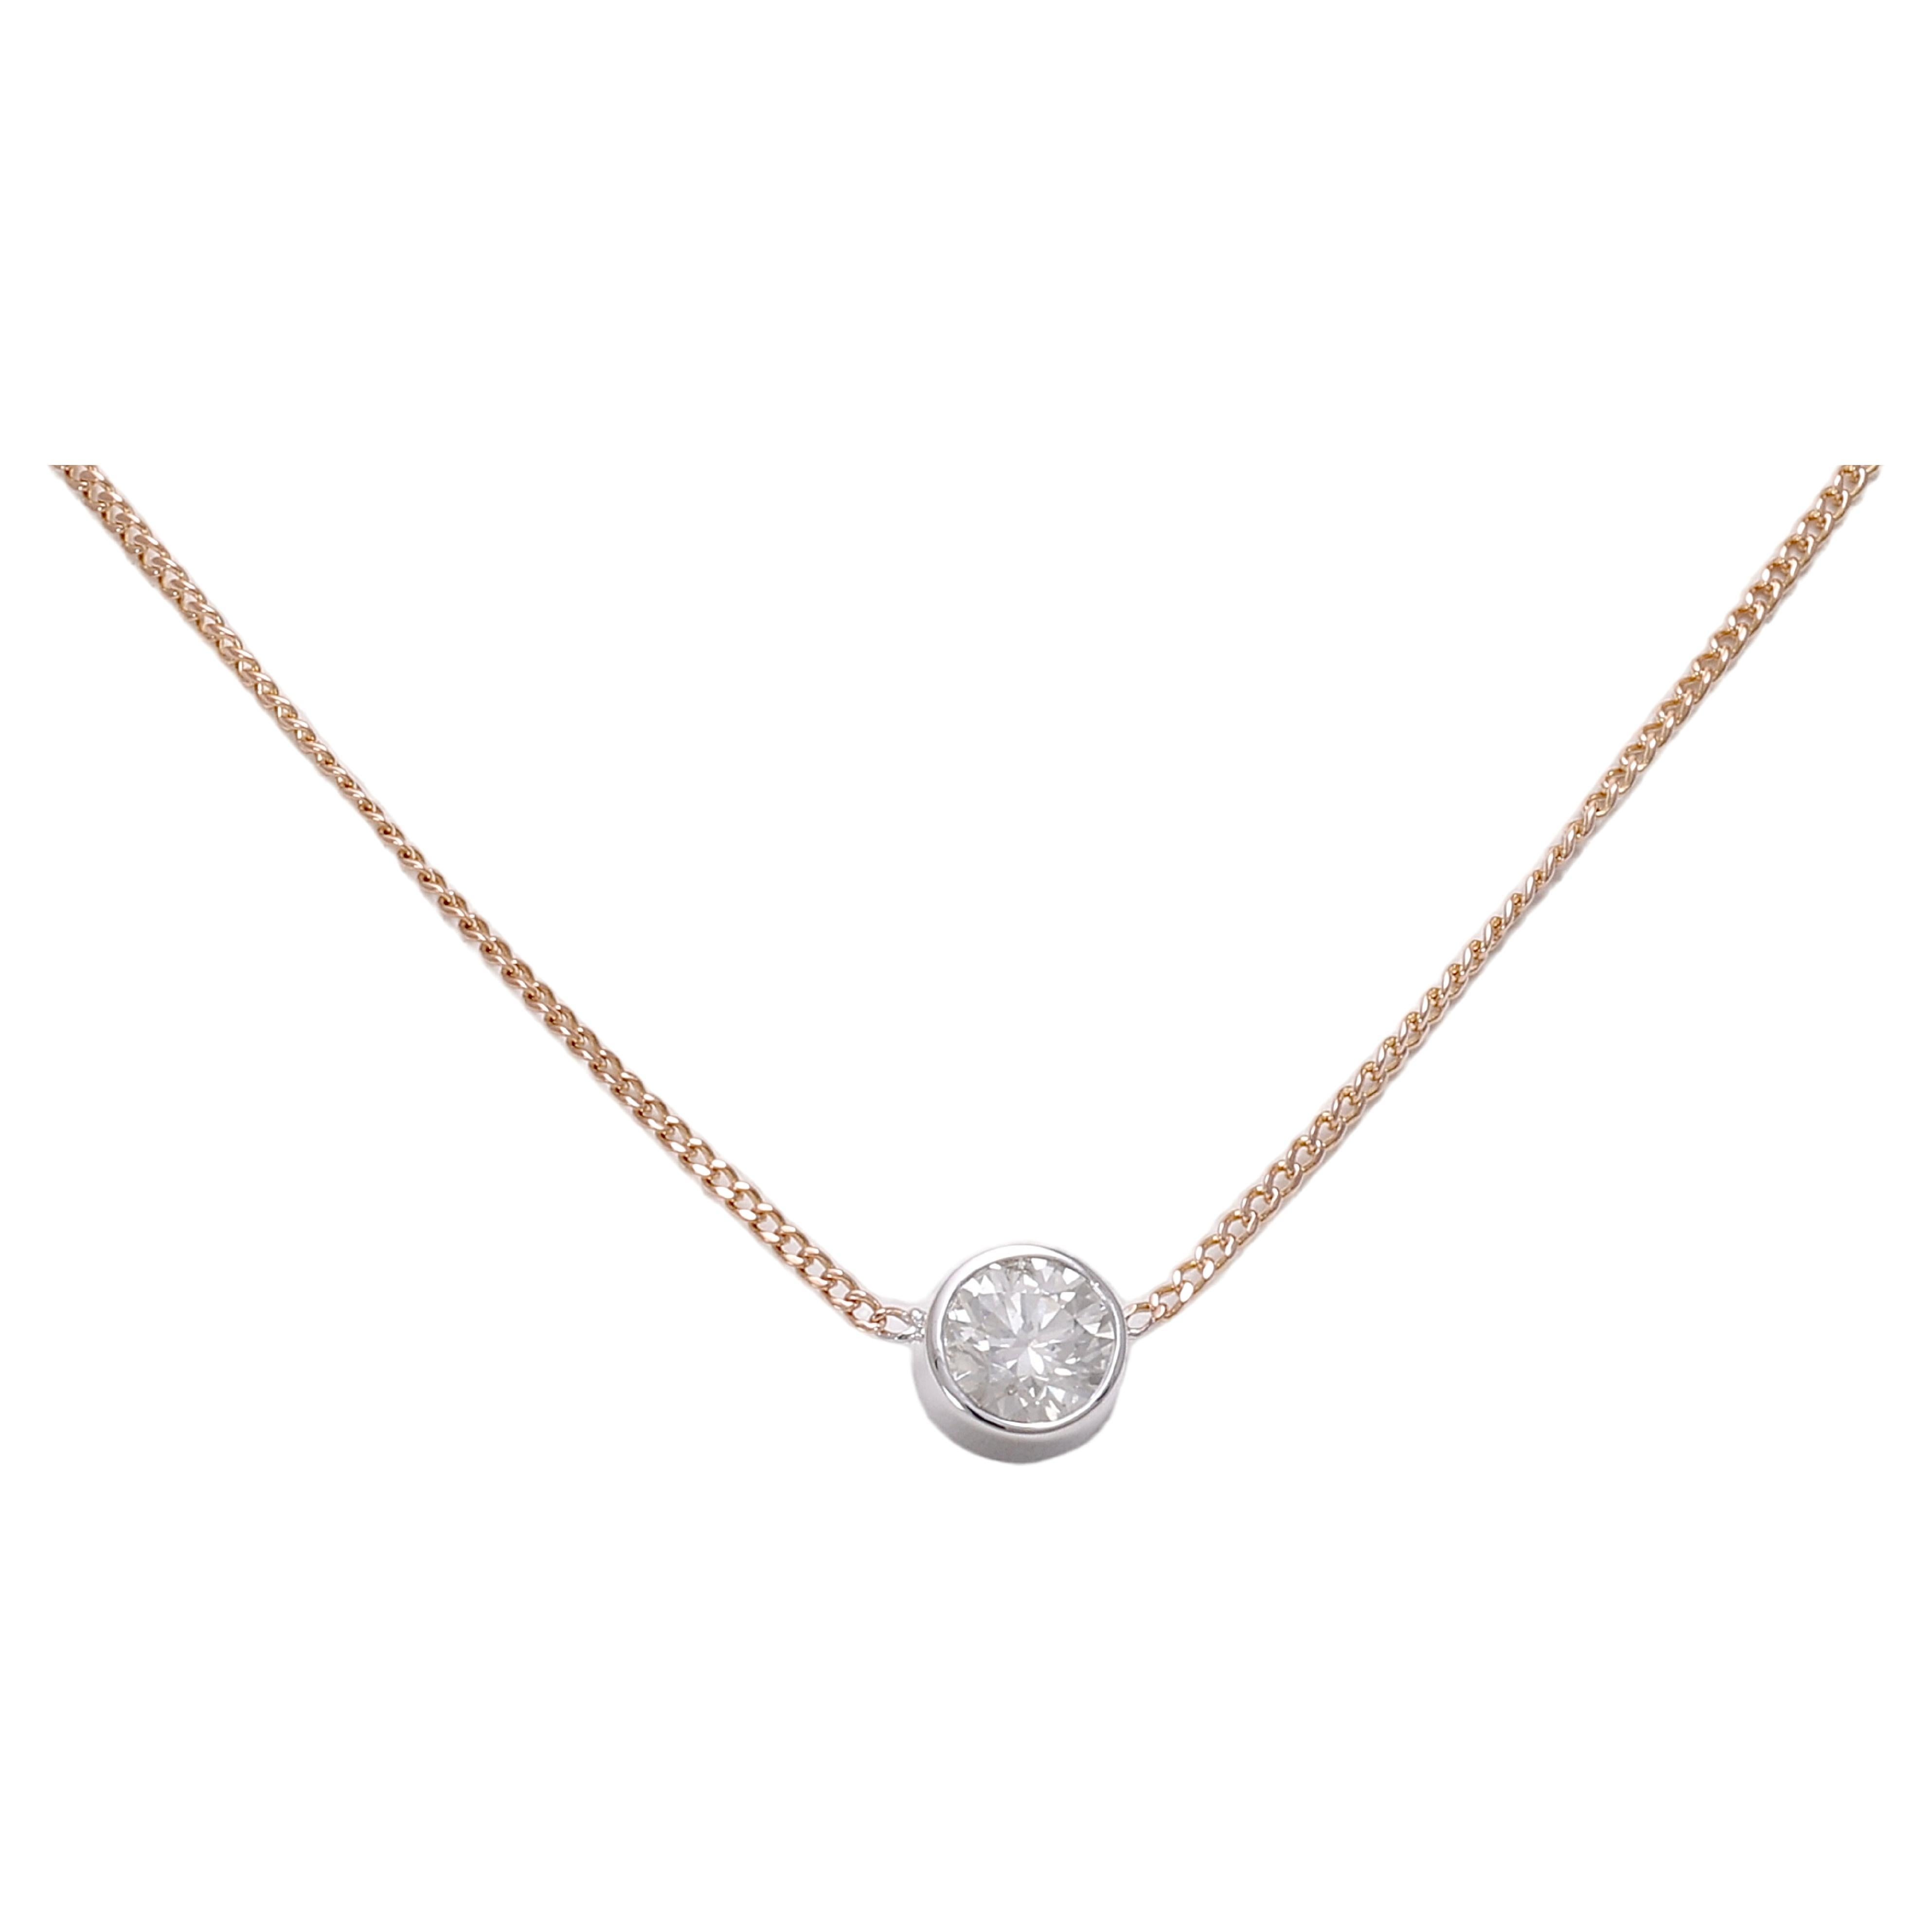 IGi Certified 18 kt. Gold Diamond Pendant Choker Necklace with 1.06 ct. Diamond